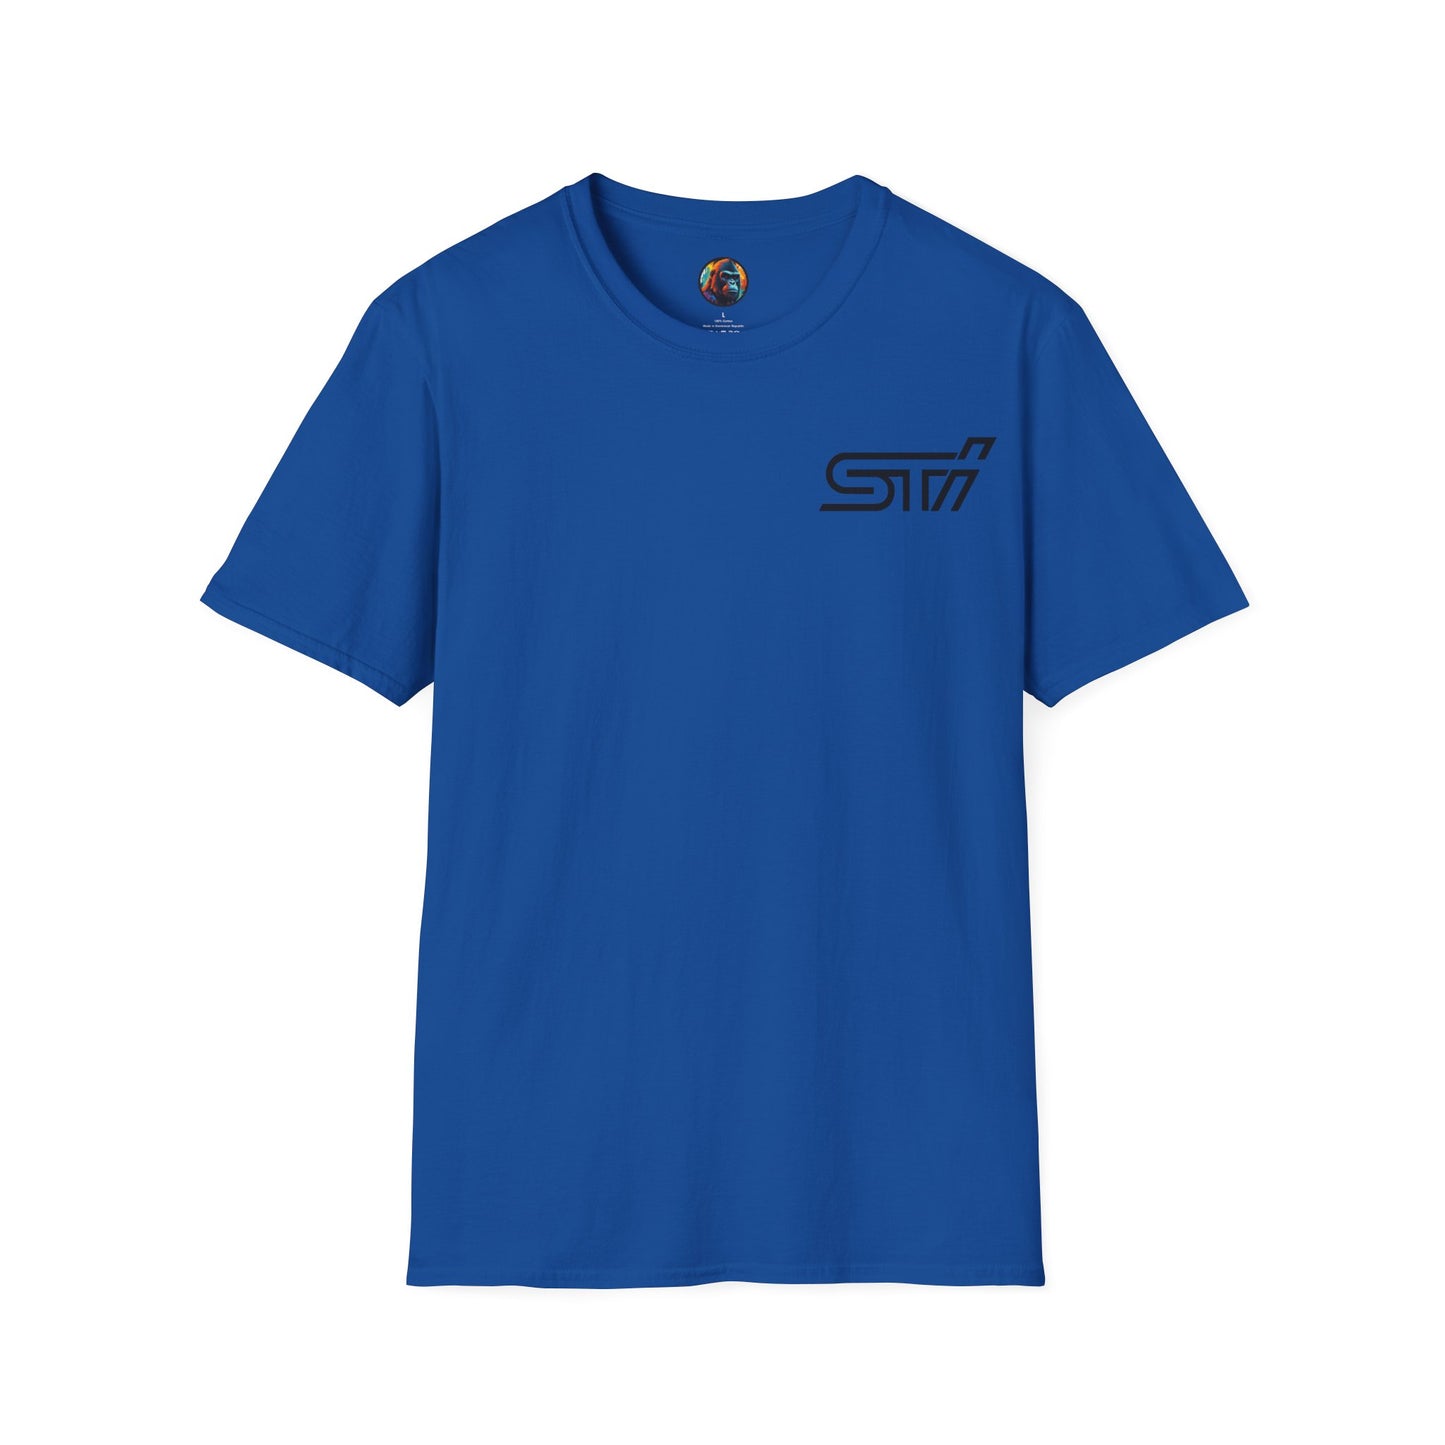 Subaru WRX STI Front End Back Logo T-Shirt